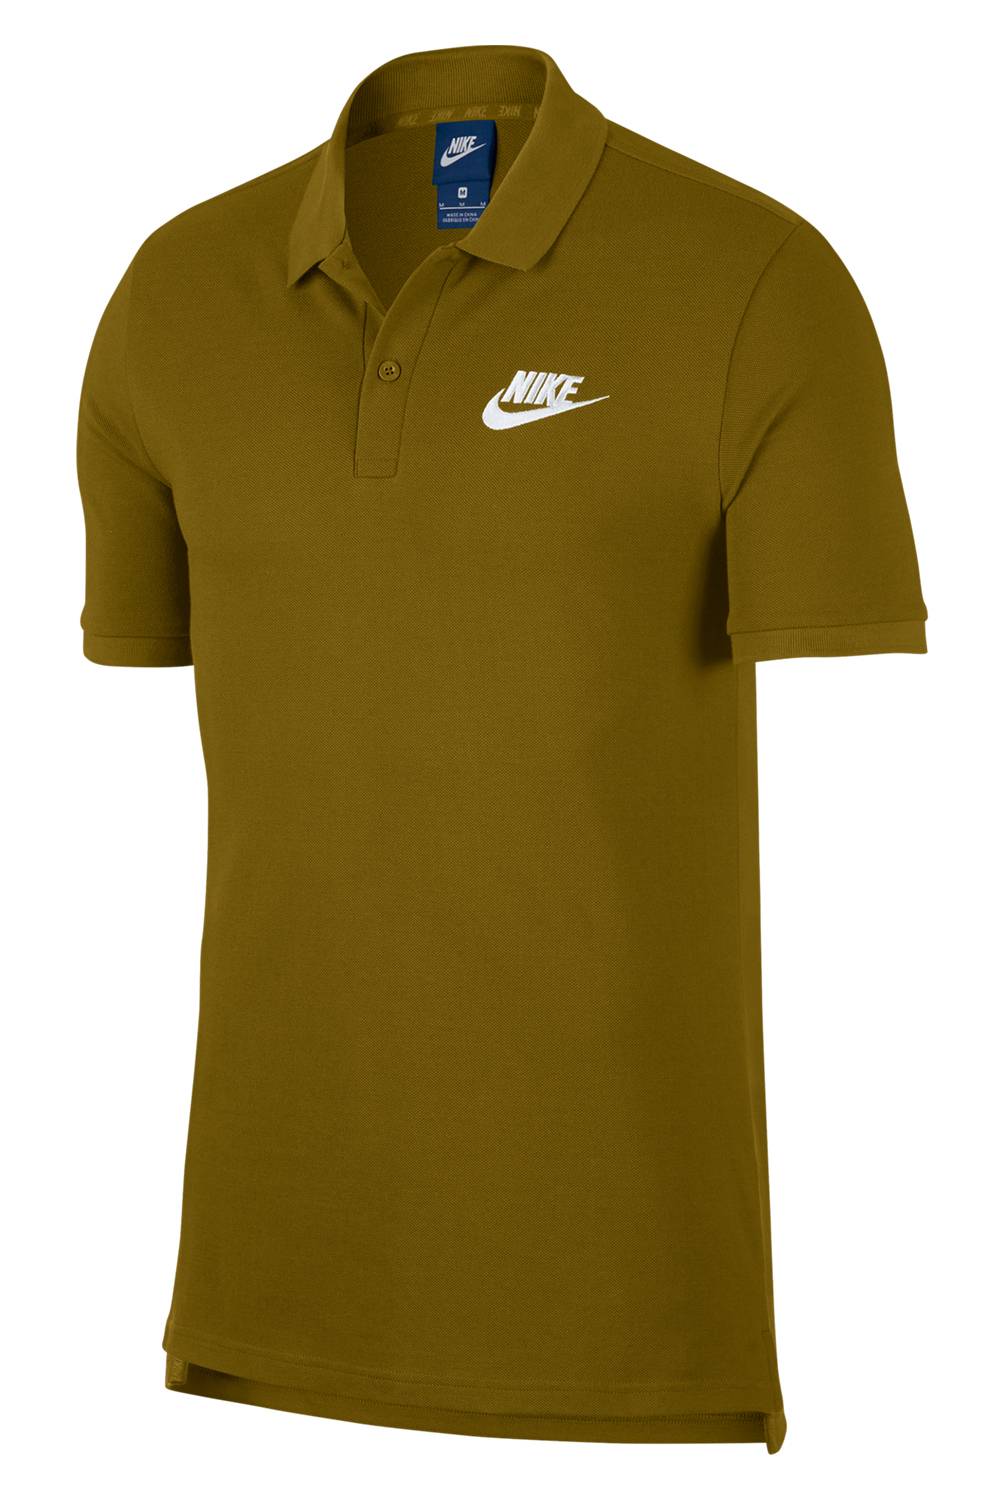 Nike - Polera Polo Sportswear